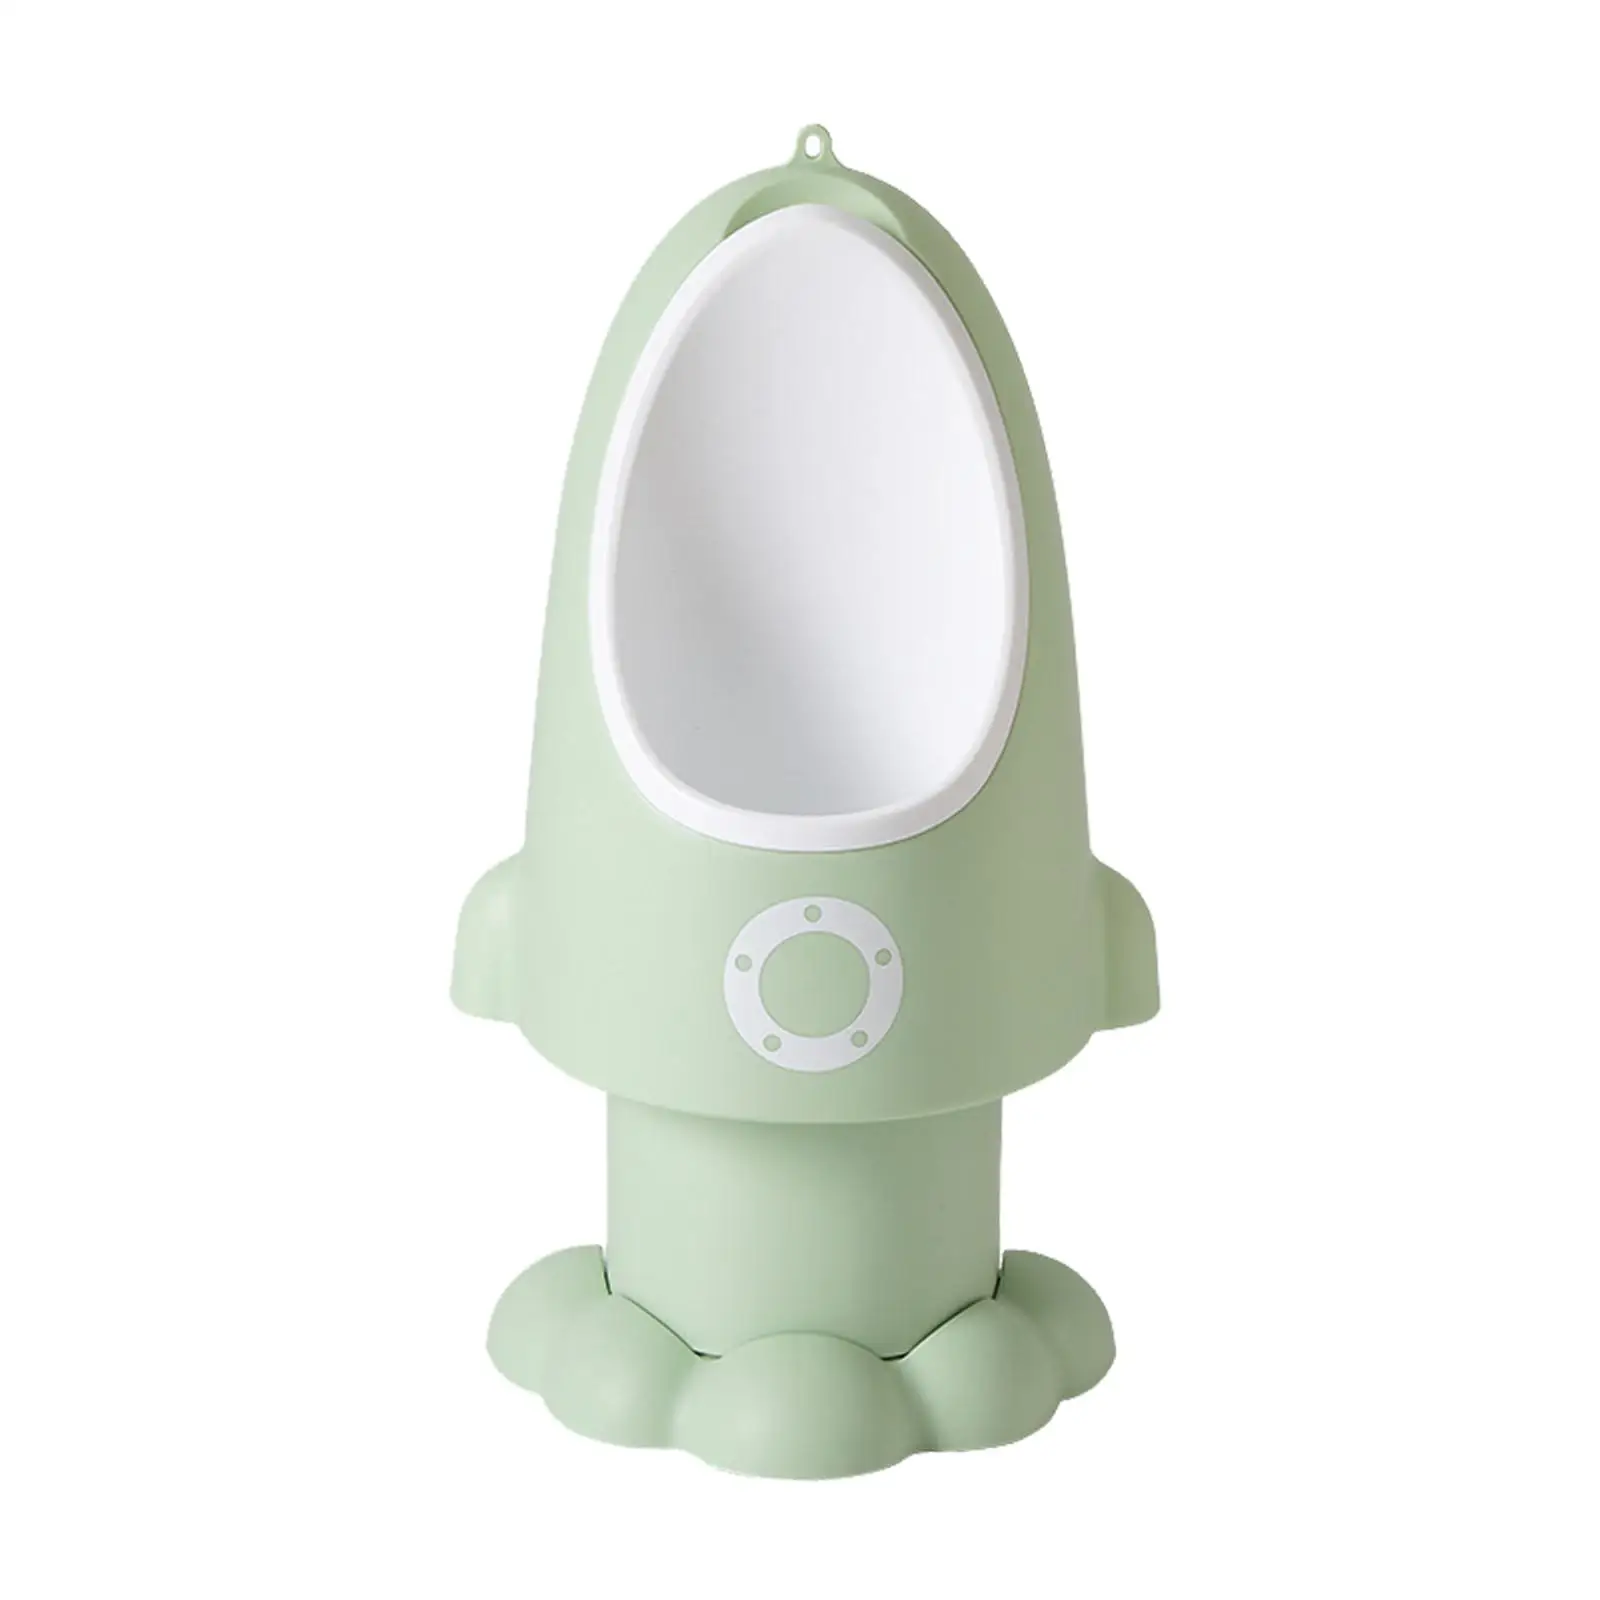 Rocket Shape Child Potty Urinal Hanging Pee Trainer Urinal Trainer Pee Training Toilet Pee Trainer for Baby Children Kids Boys